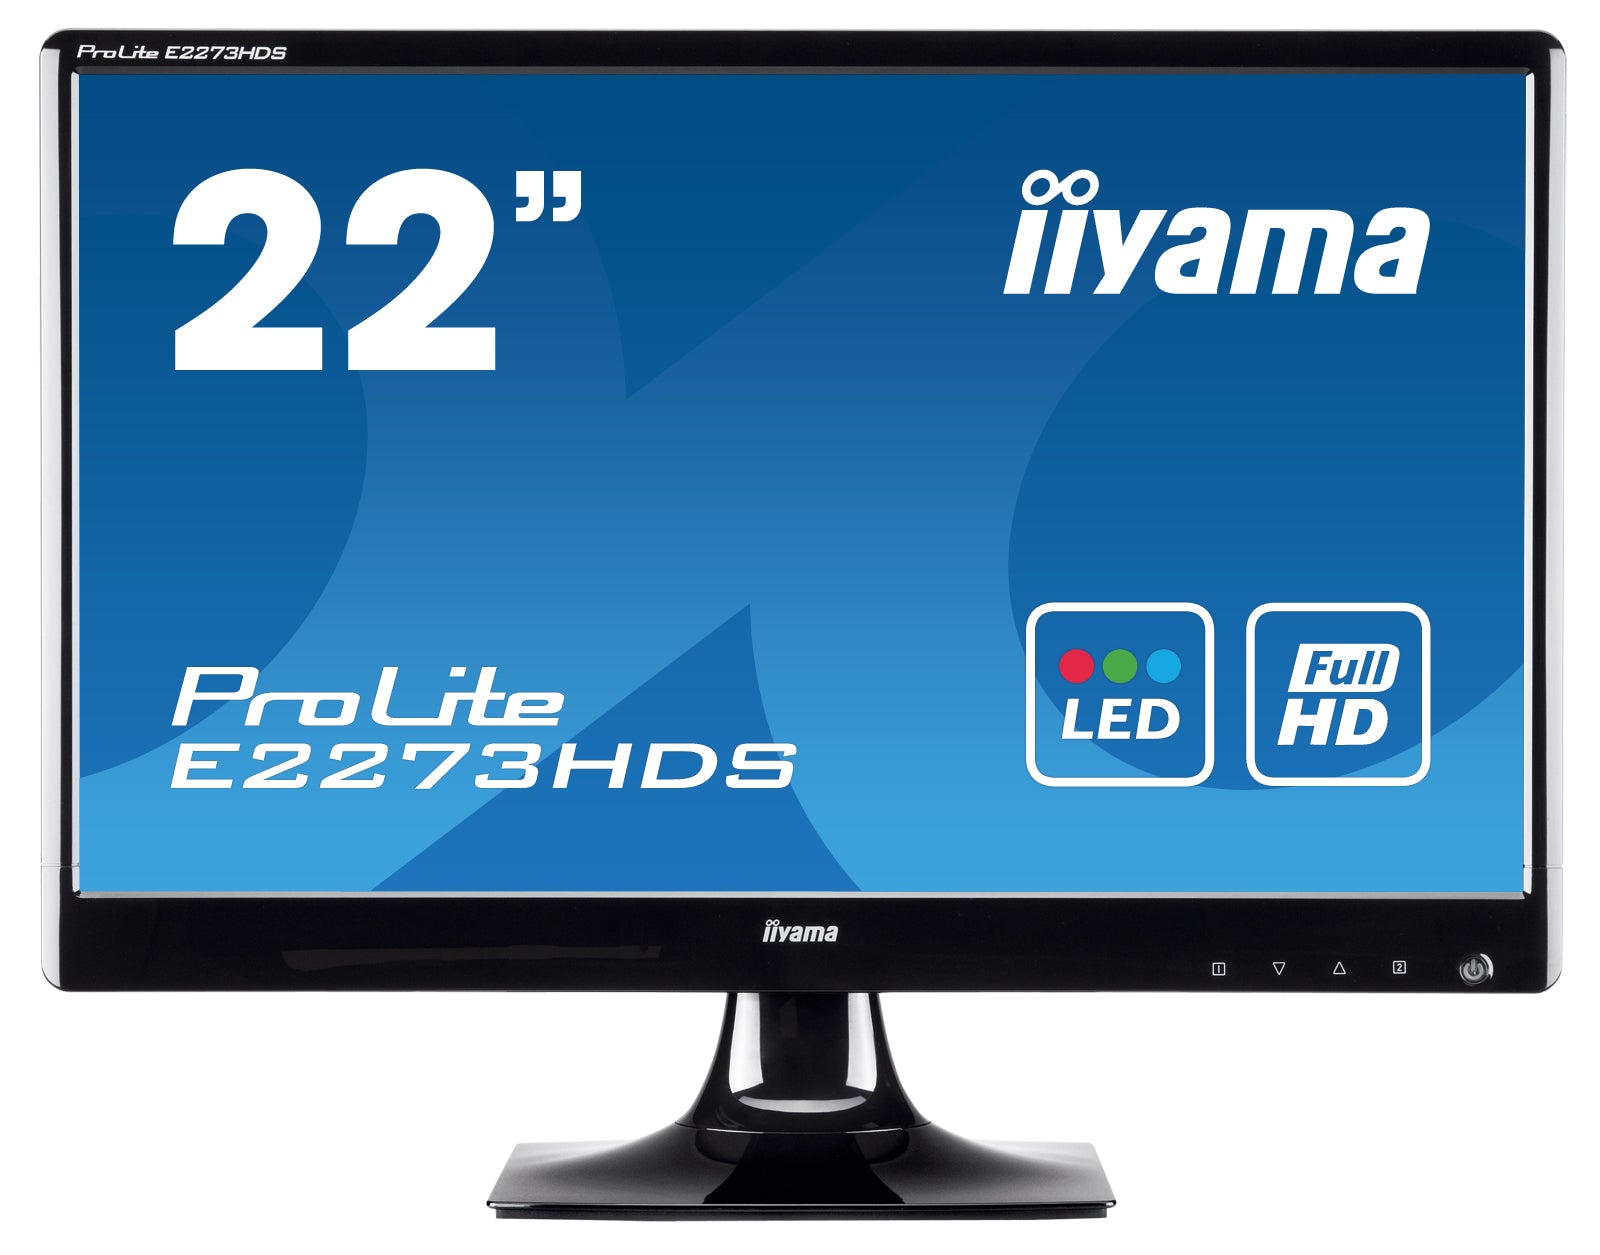 Iiyama ProLite E2273HDS Monitor - Black - Refurbished Good